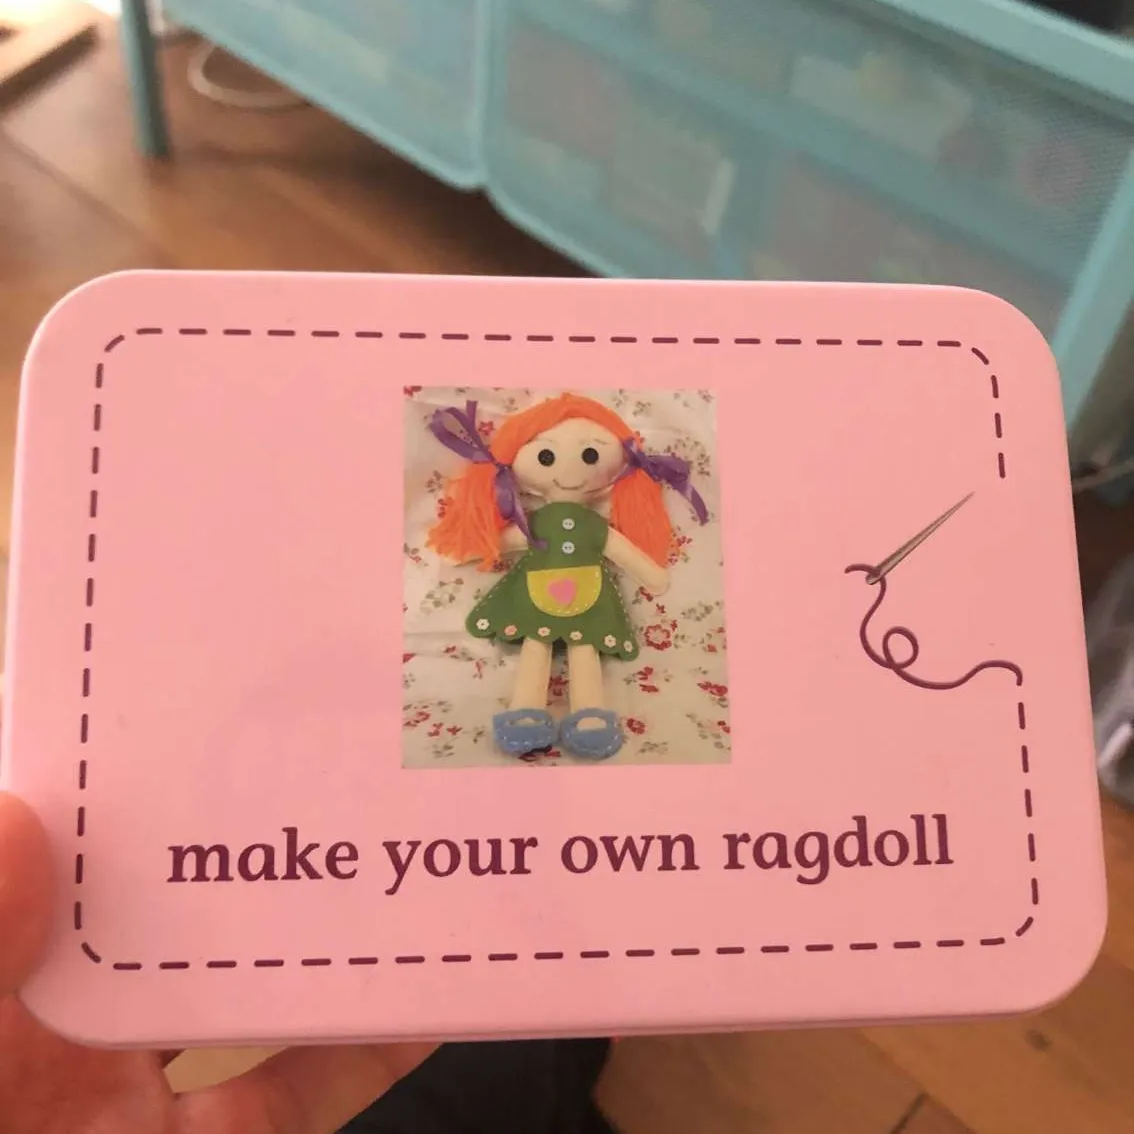 Make Your Own Ragdoll kit photo 1